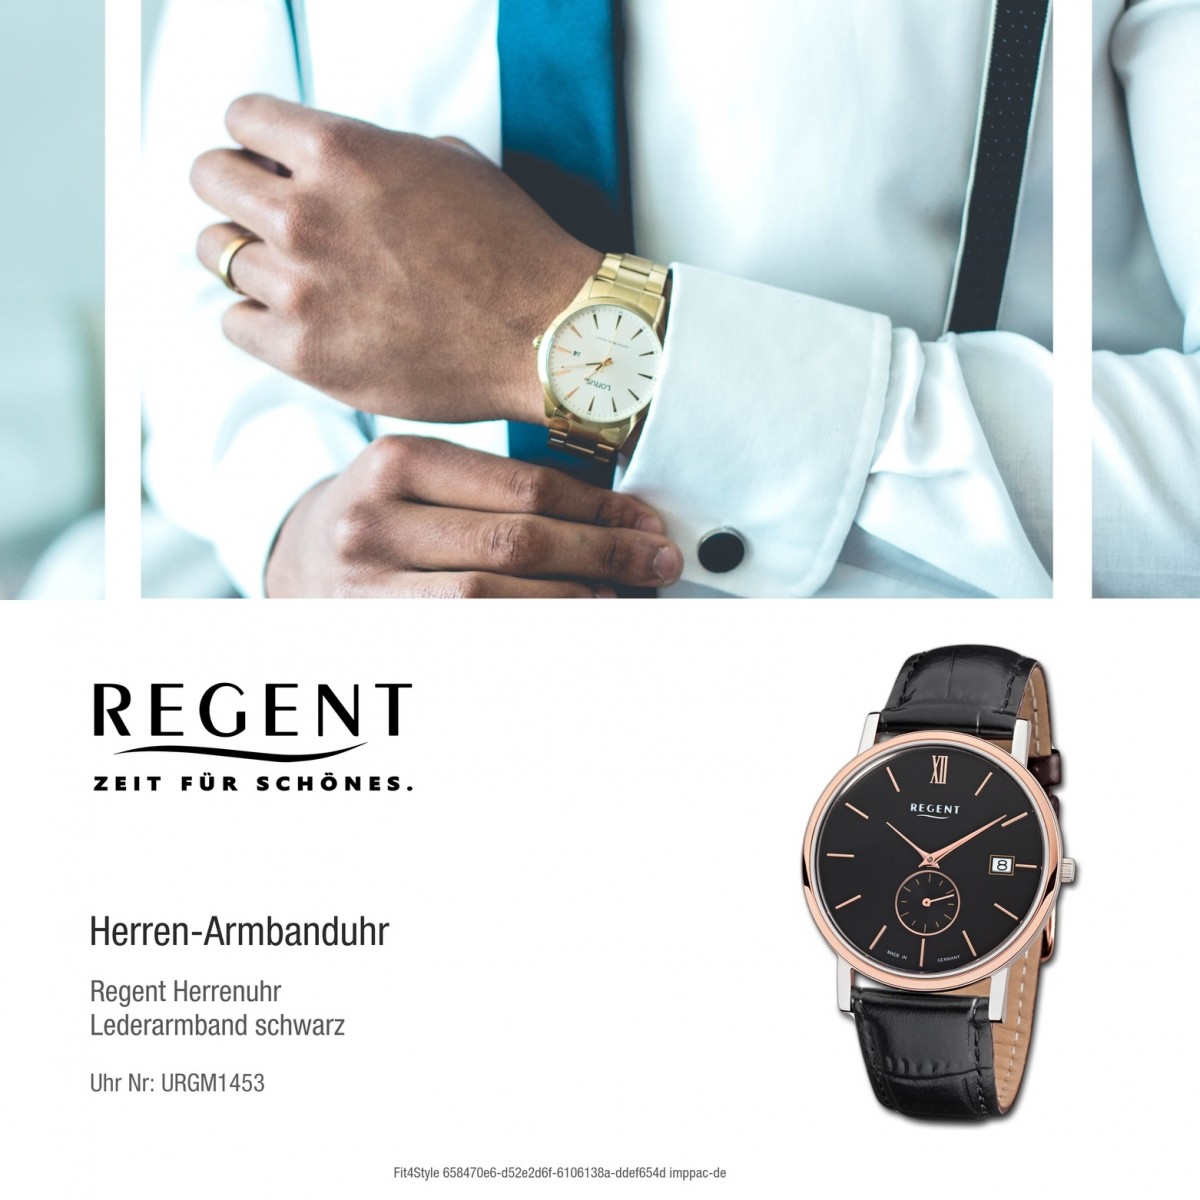 Uhr URGM1453 Quarz-Uhr Herren-Armbanduhr Leder-Armband Regent schwarz